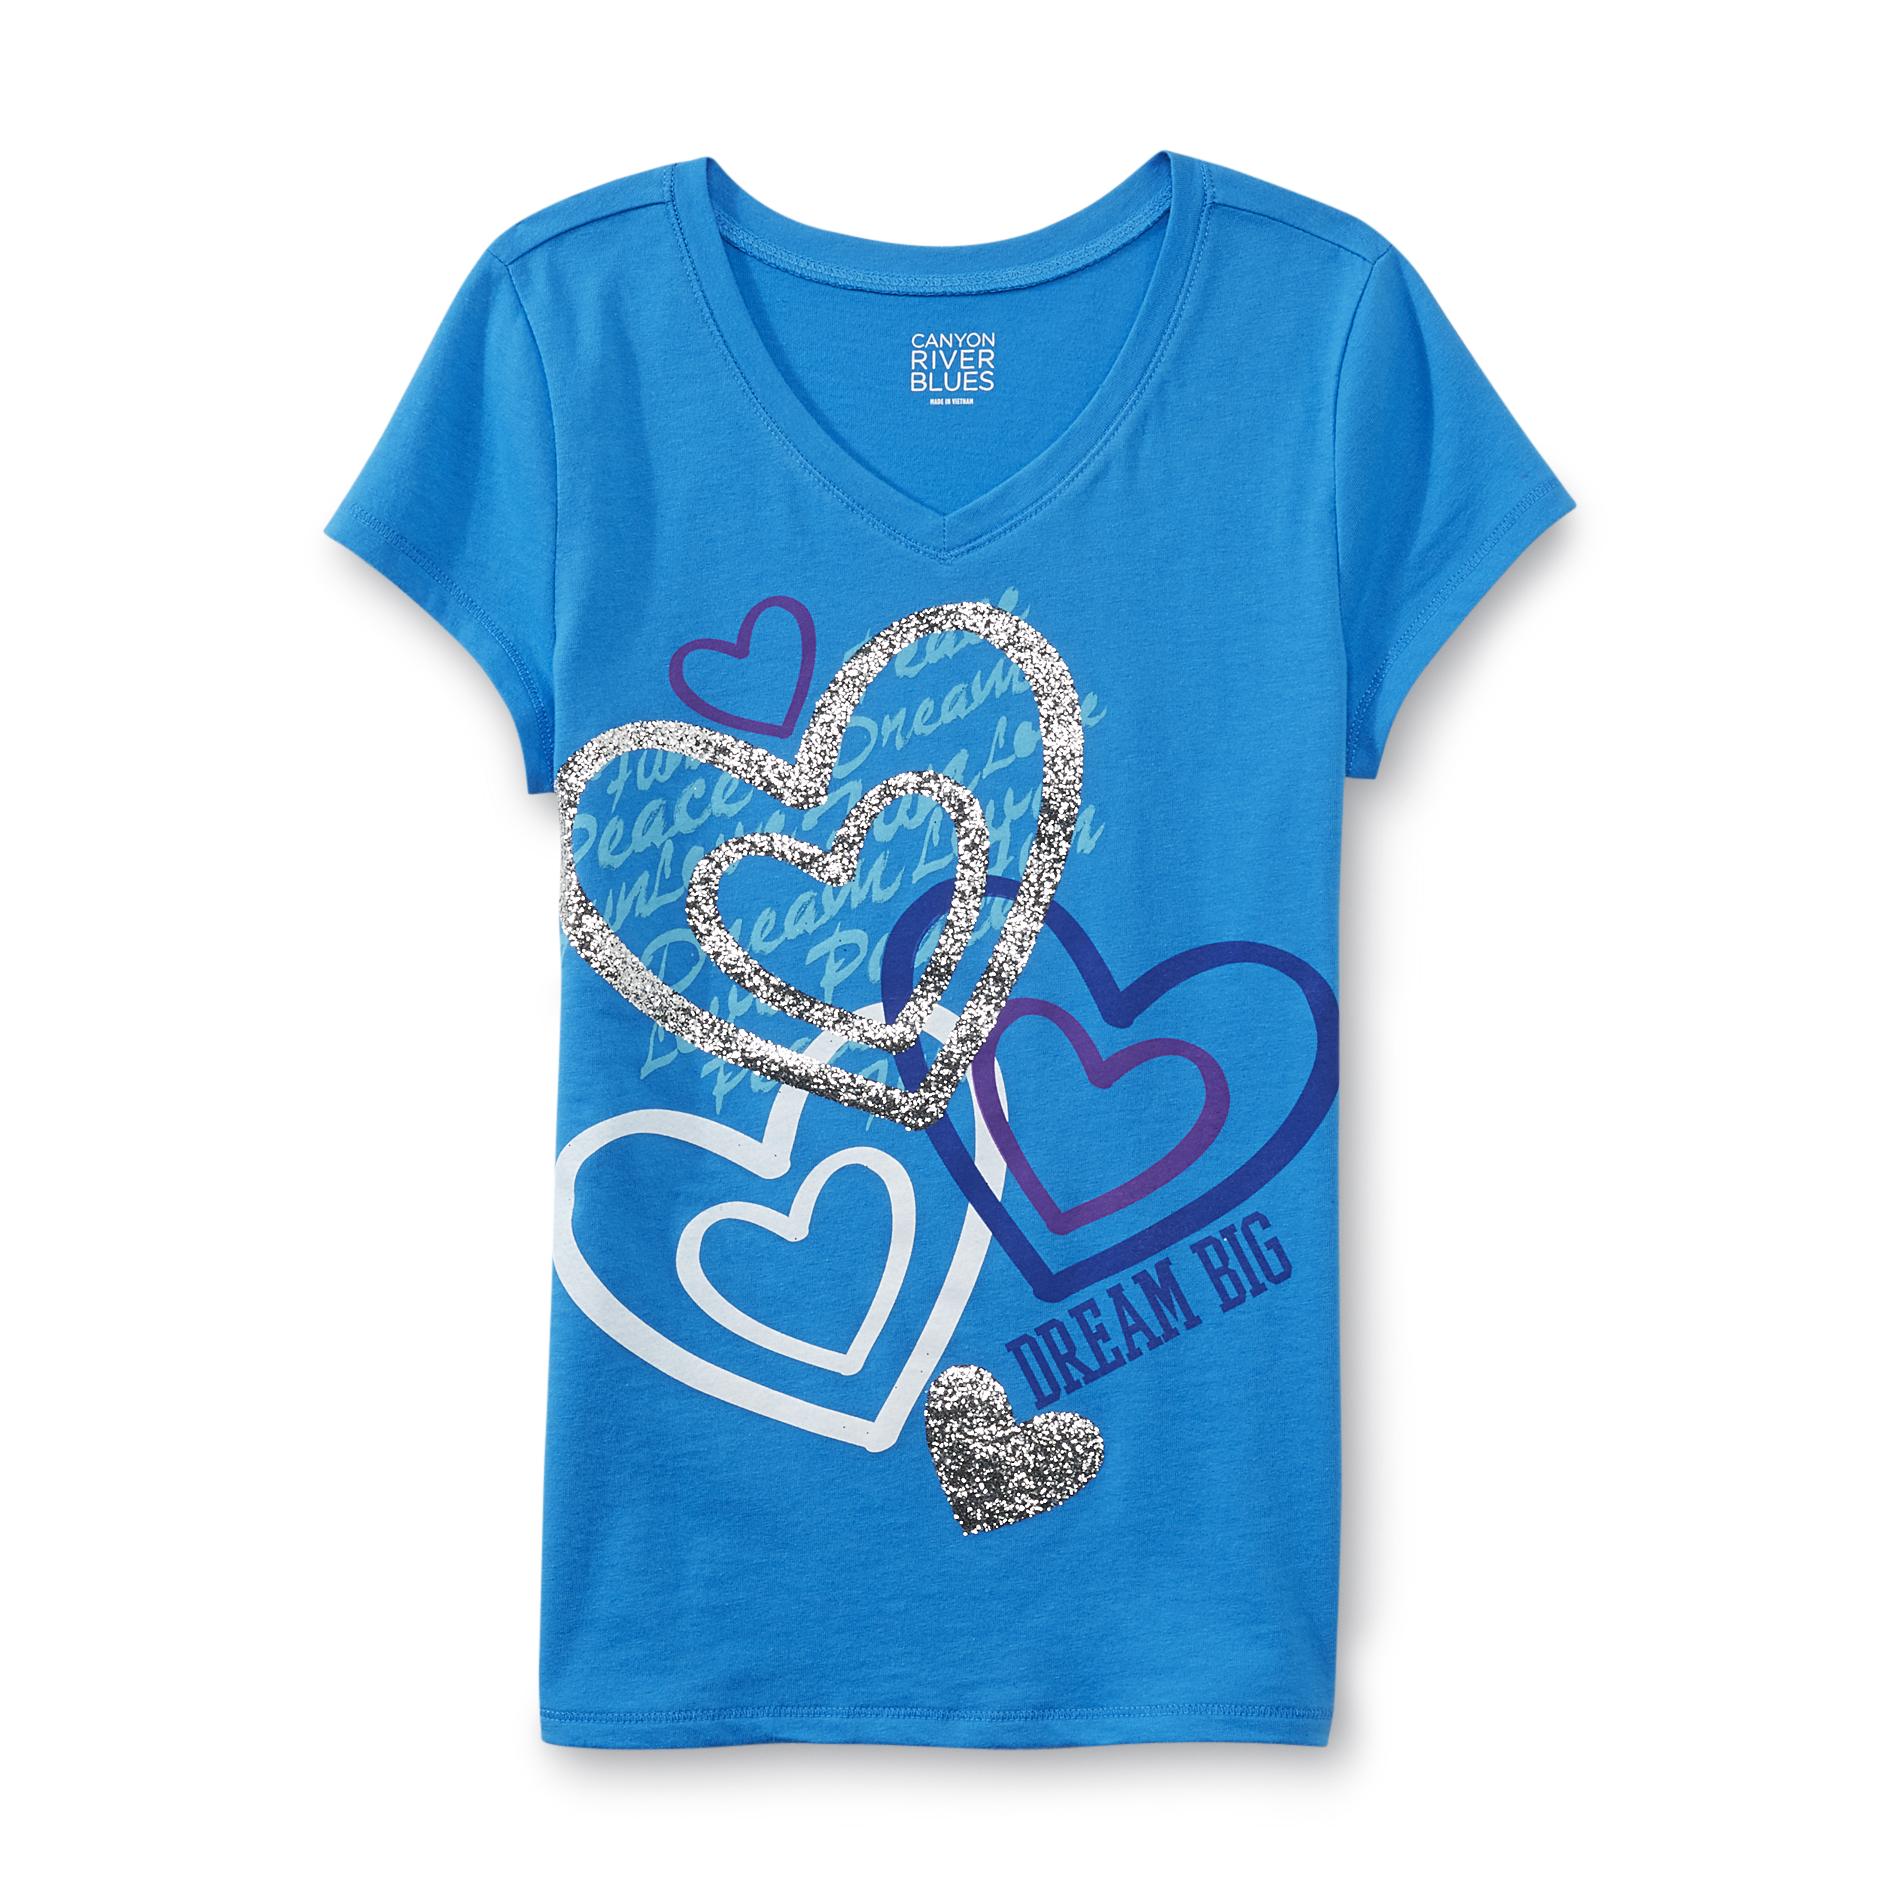 Canyon River Blues Girl's Graphic T-Shirt - Dream Big